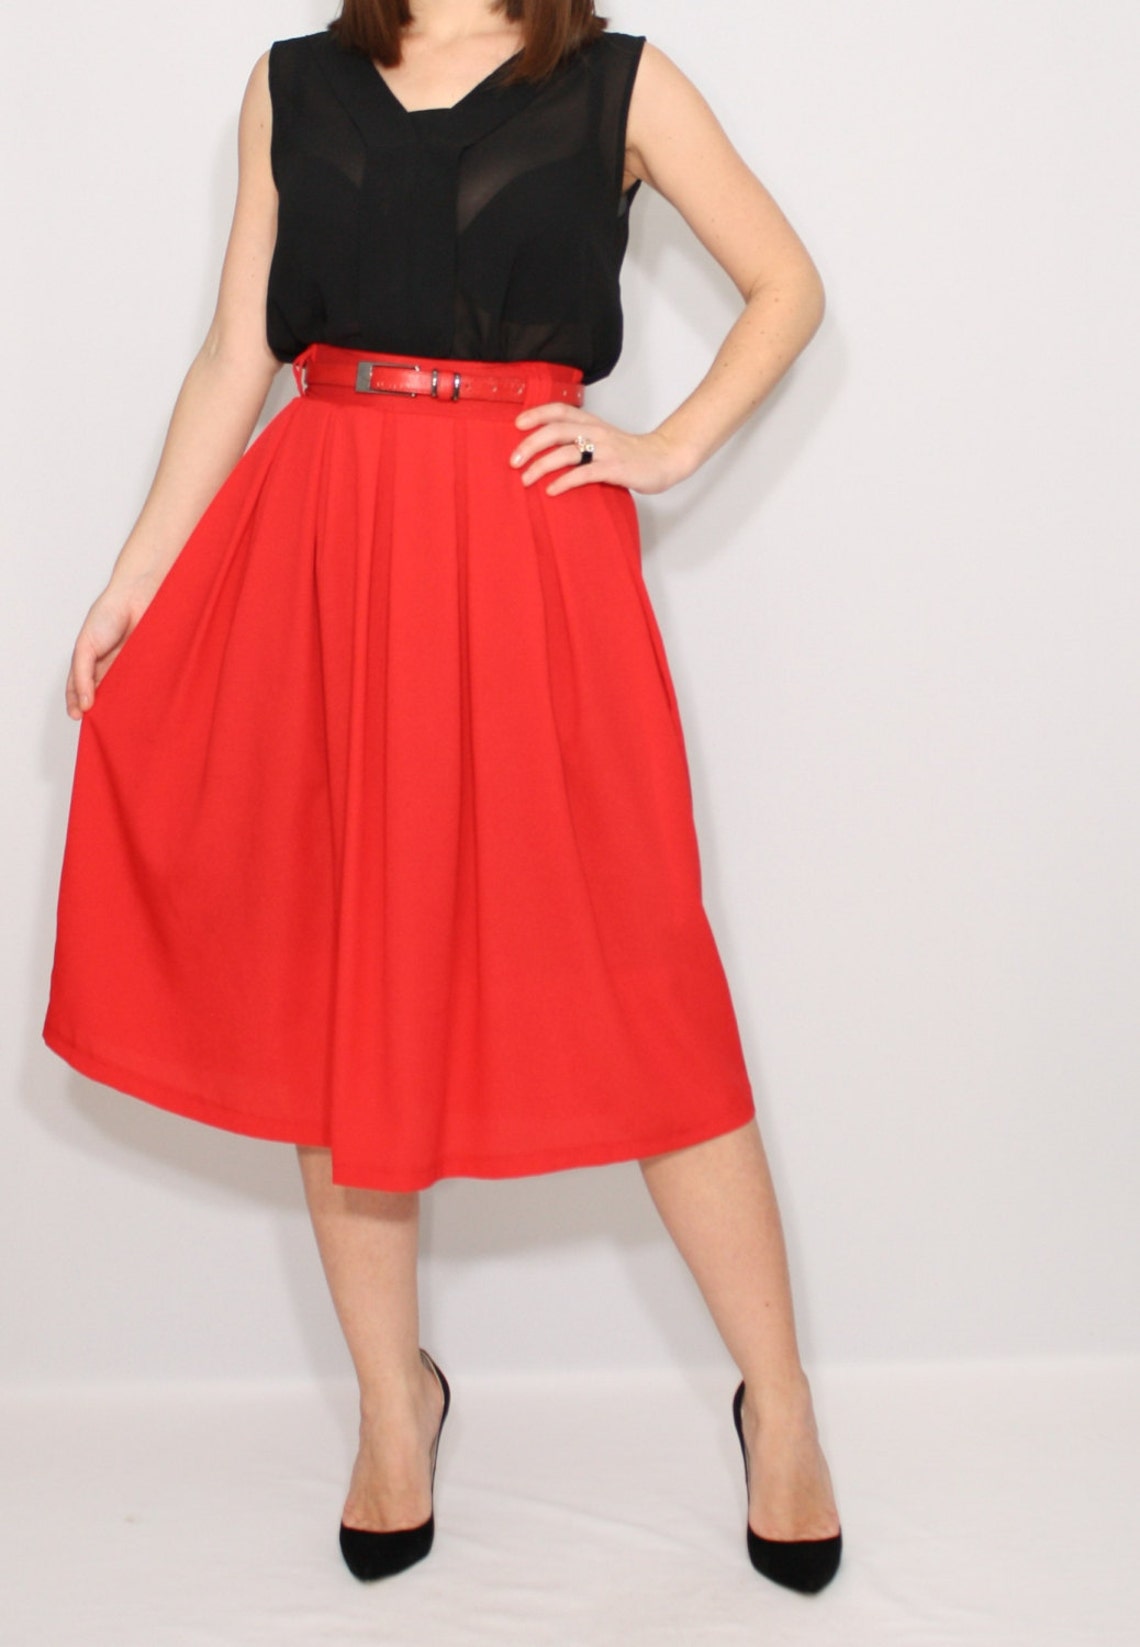 Red chiffon midi skirt with pockets A line skirt high waist | Etsy